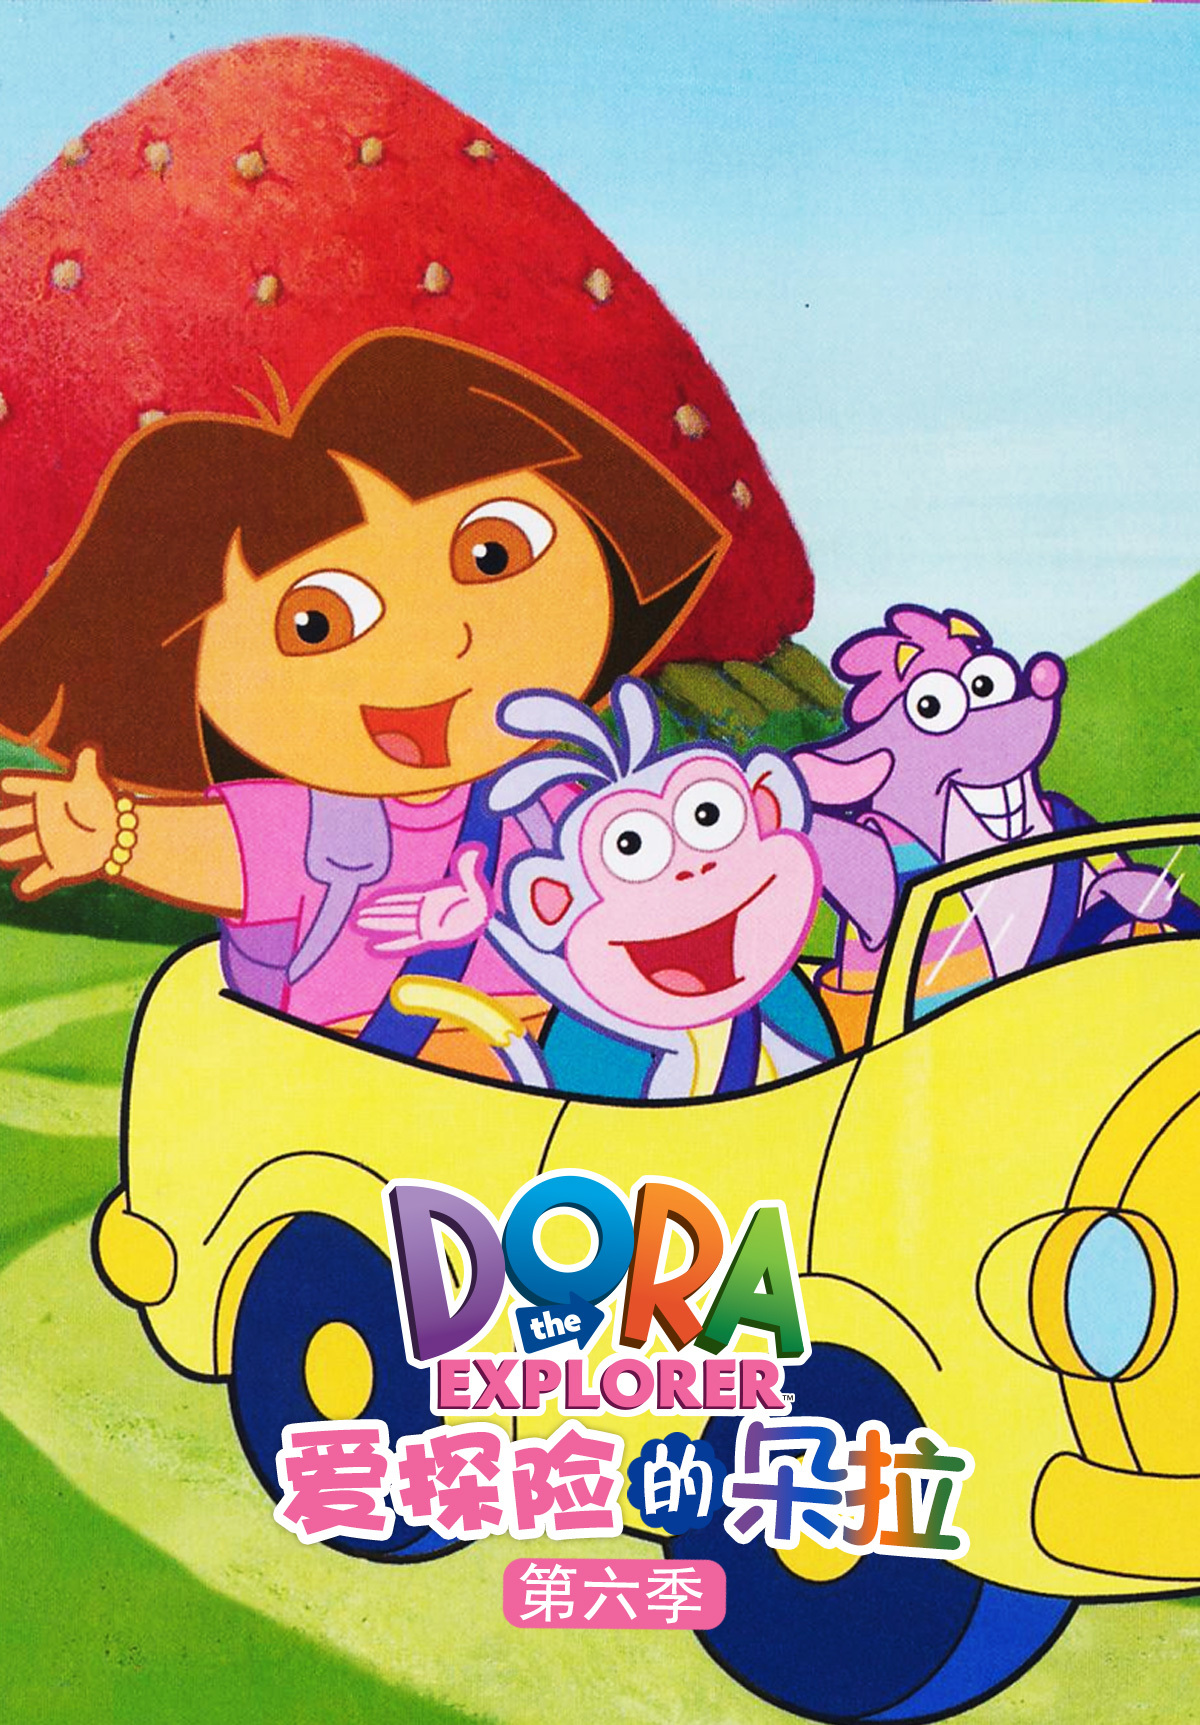 Dora the Explorer Story Series_The Explorer Book Dora Love Stories Online Listening_Dora the Explorer Story Book